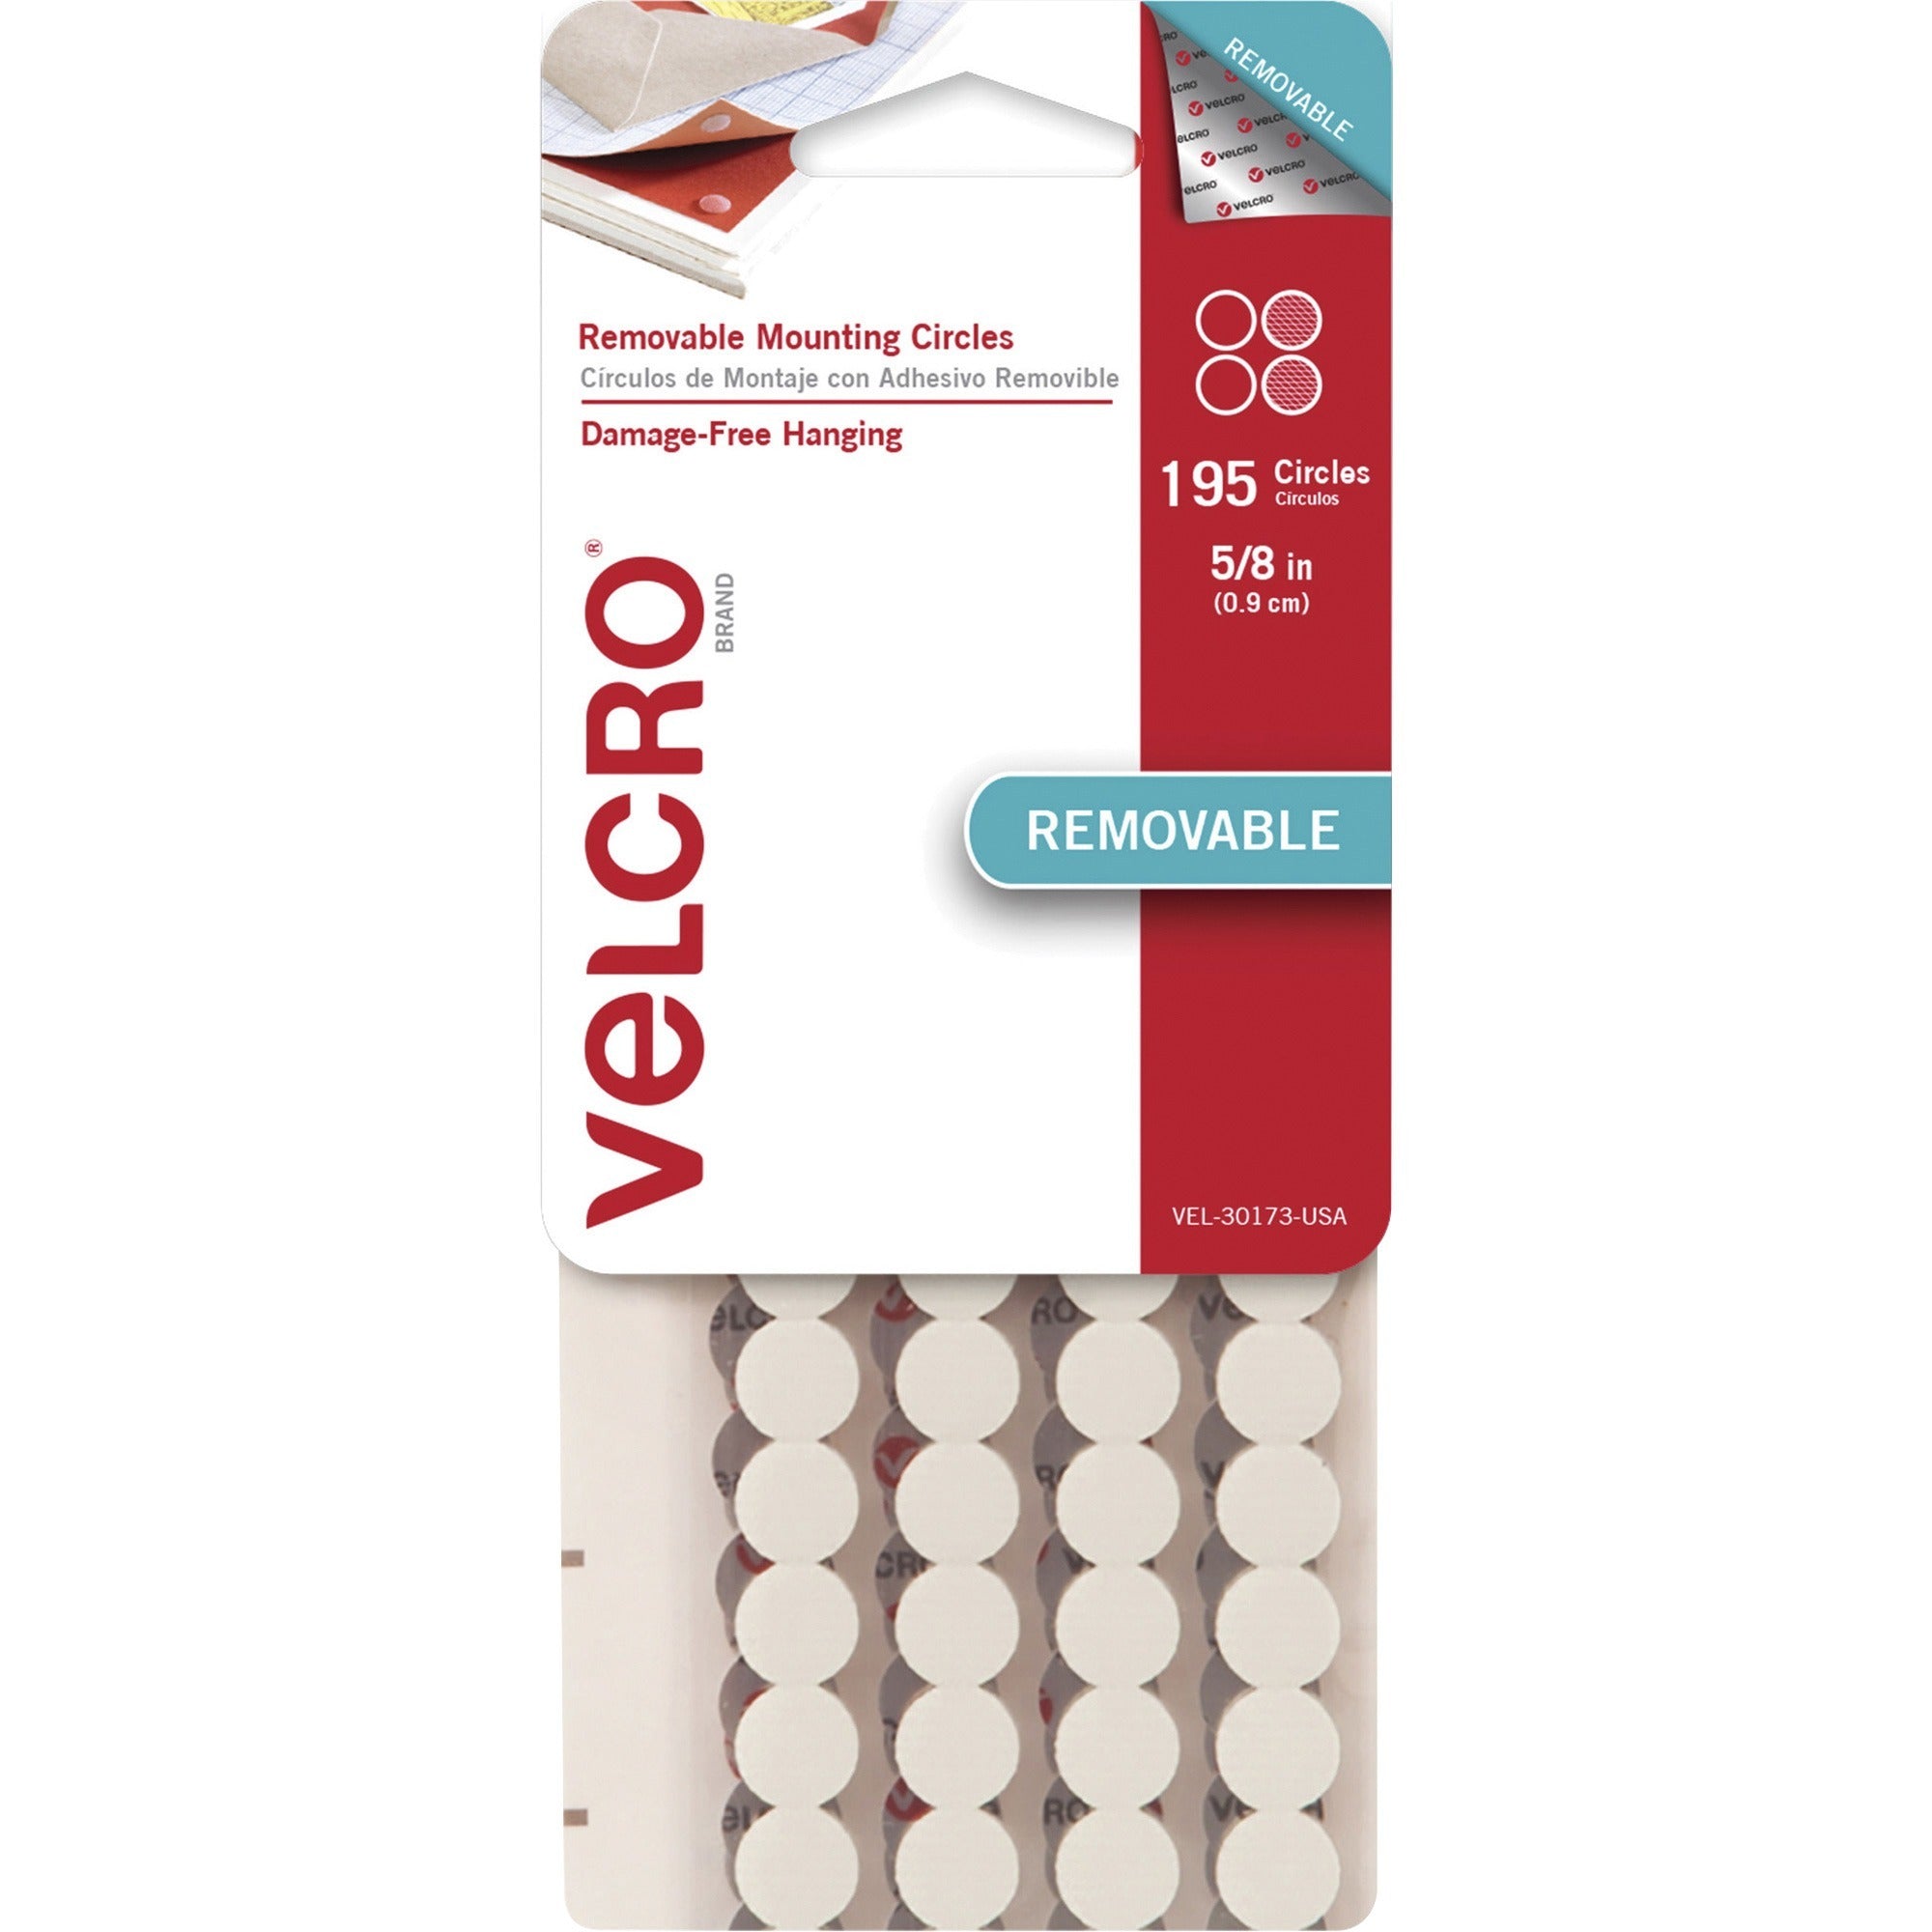 velcro-removable-mounting-tape-063-dia-195-pack-white_vek30173 - 1